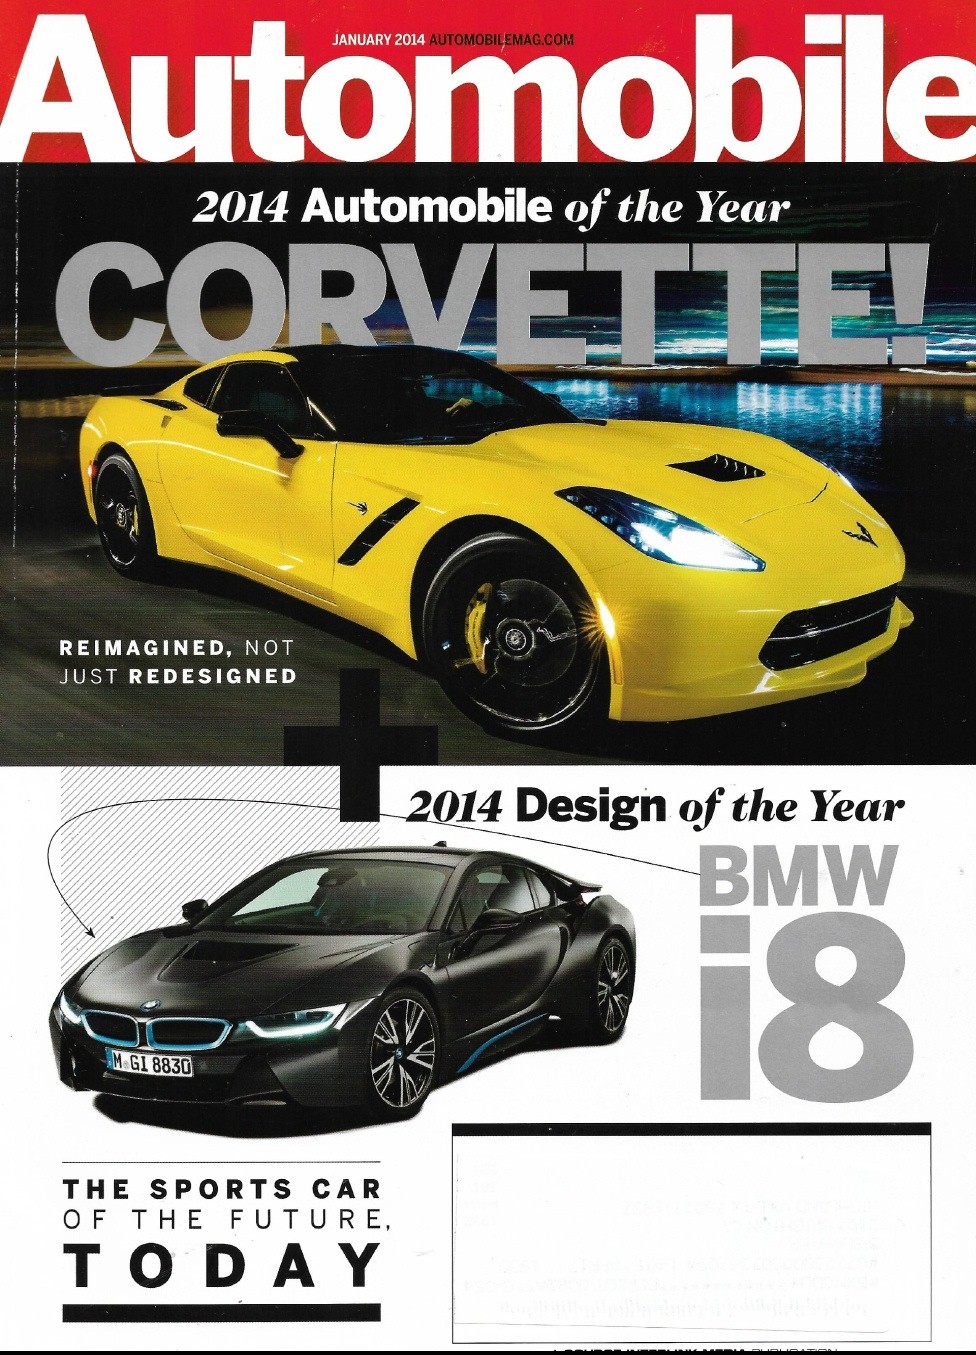 Audi EVS Automobile Revista Febrero 2015 Porsche Top Secret Evs & Híbridos BMW 